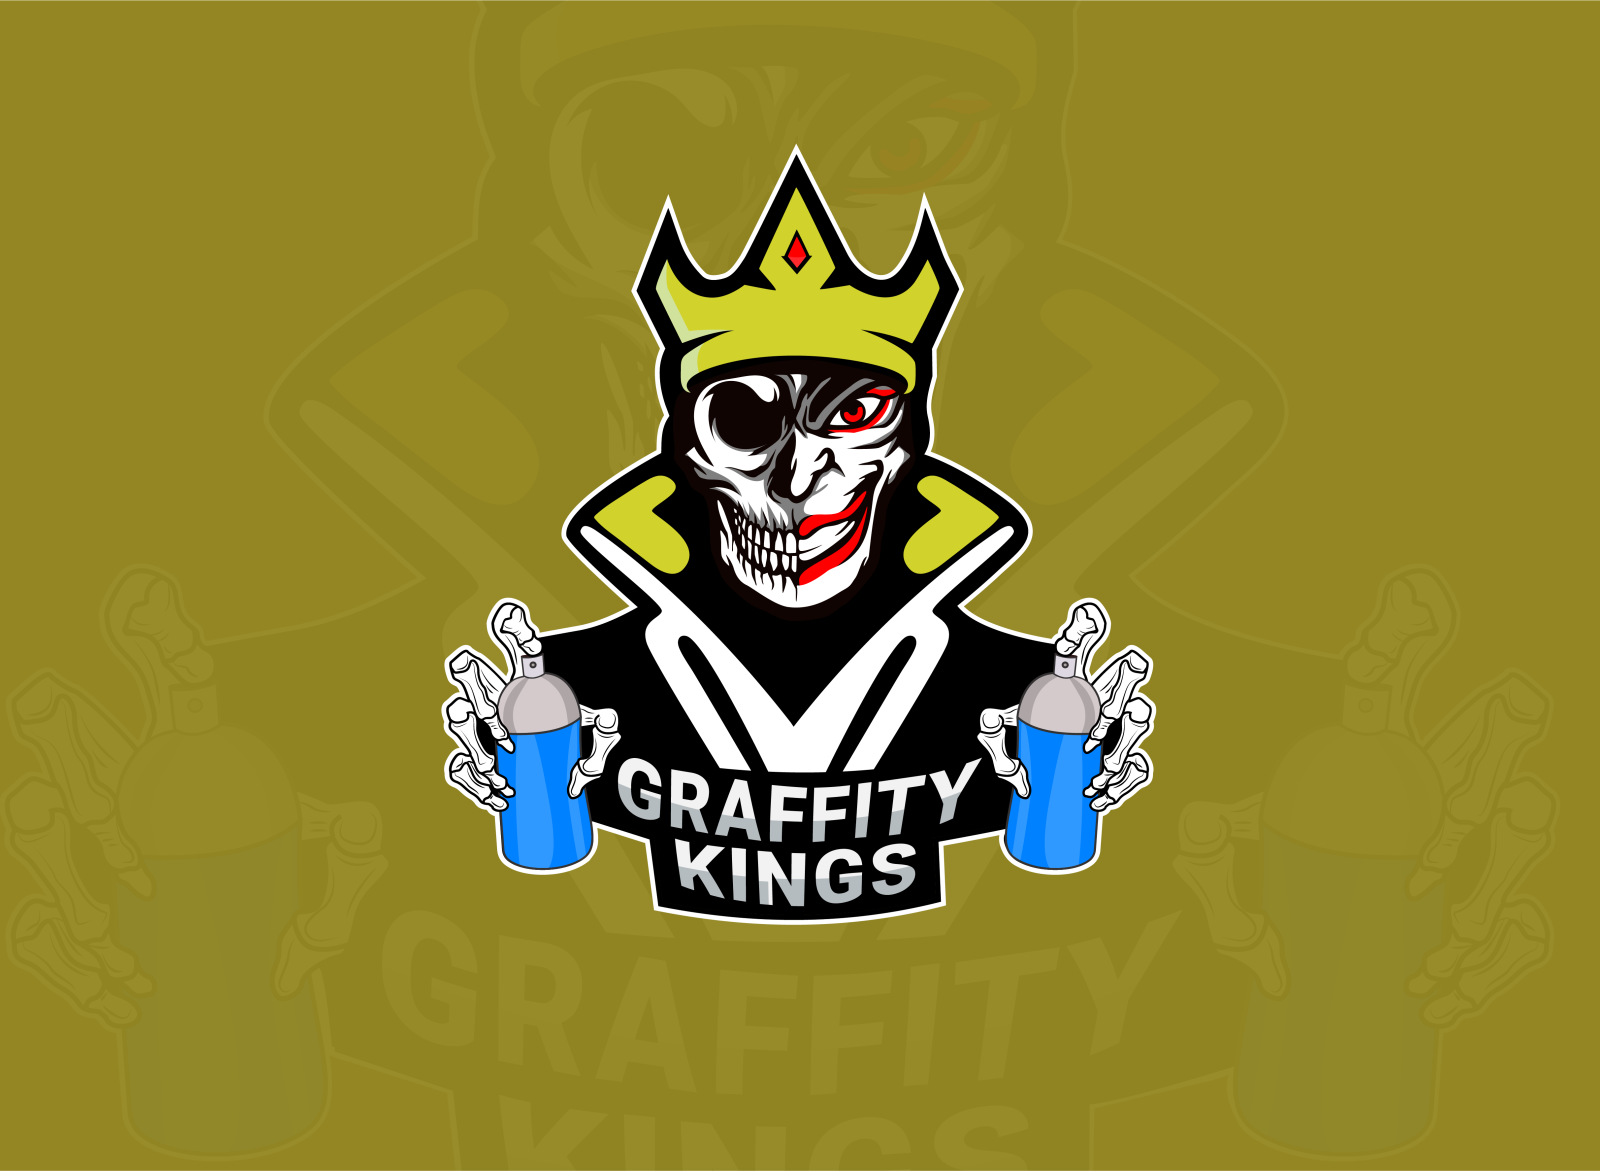 Graffiti kings logo by zakaria zareie on Dribbble